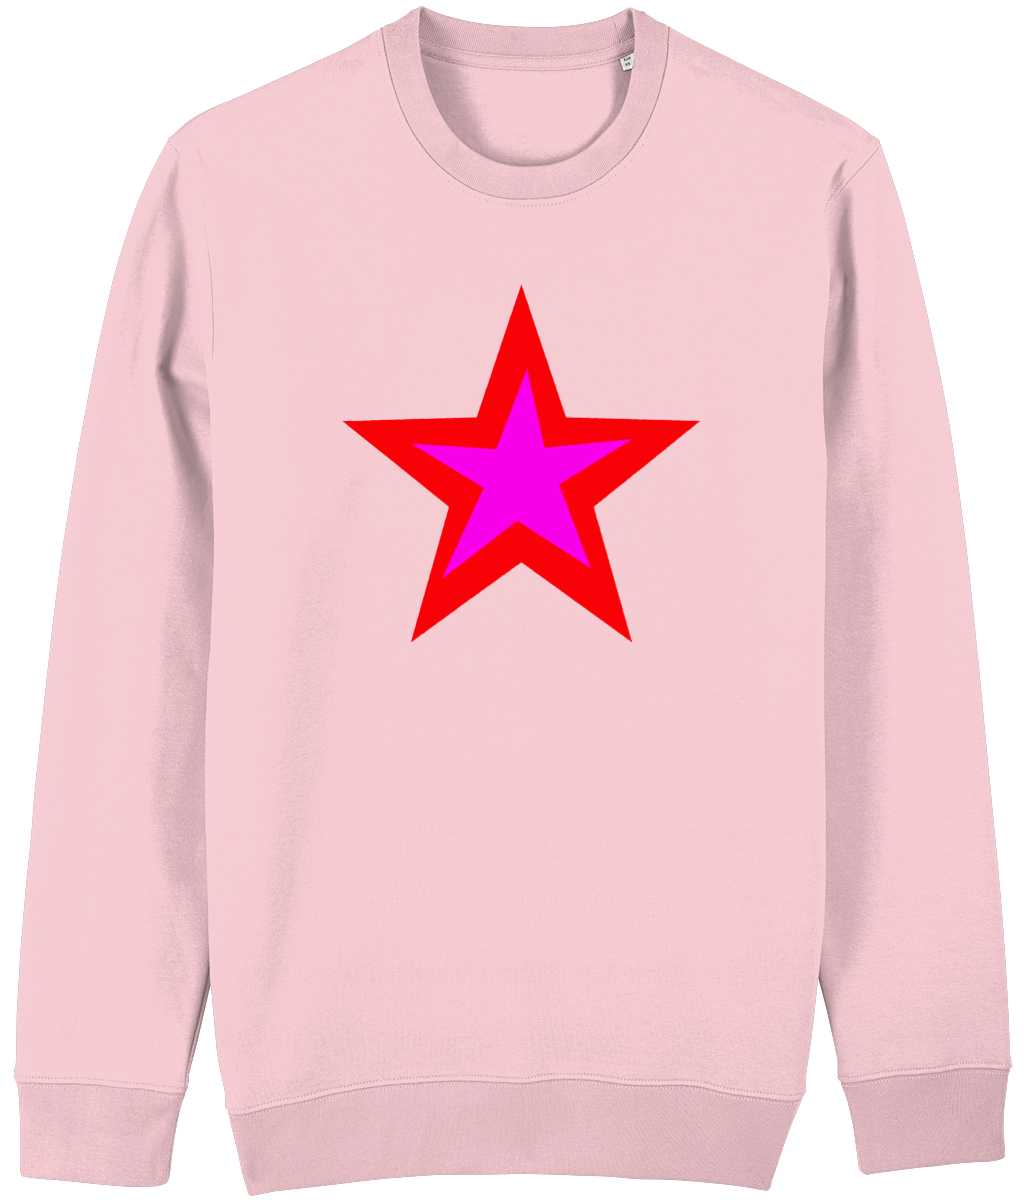 Star play non gender organic sweatshirt Cherchez La Femme brand